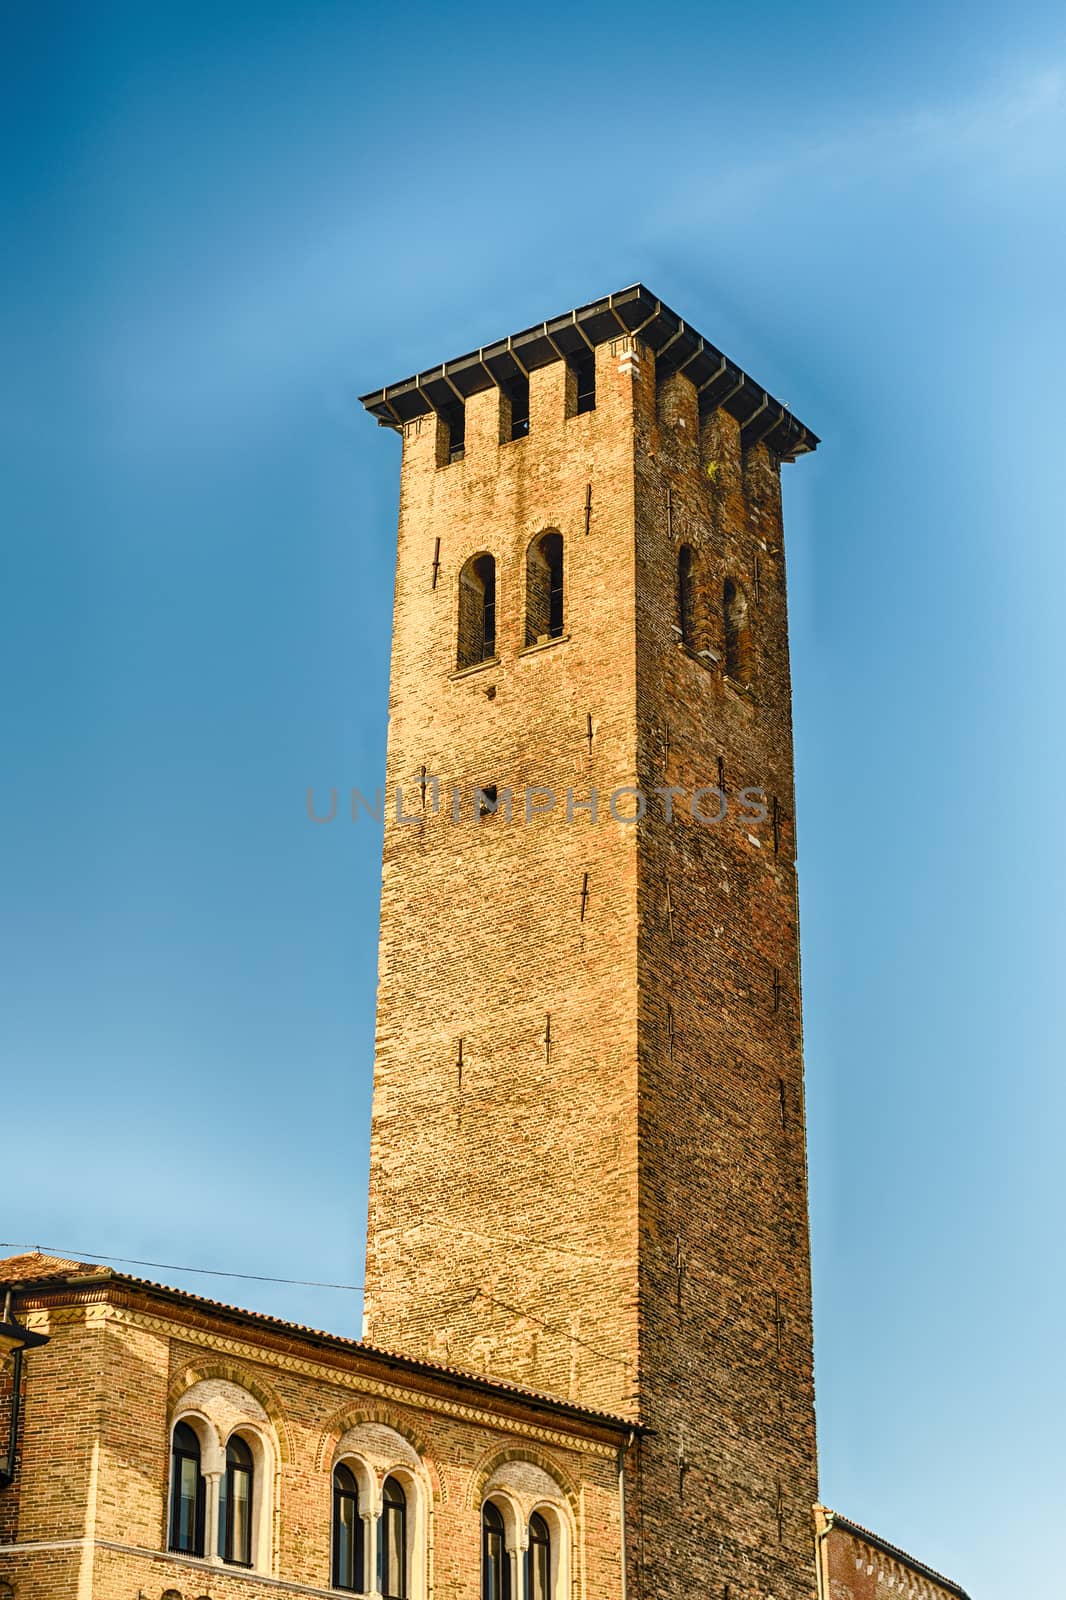 Medieval tower in Piazza Erbe, Padua, Italy by marcorubino